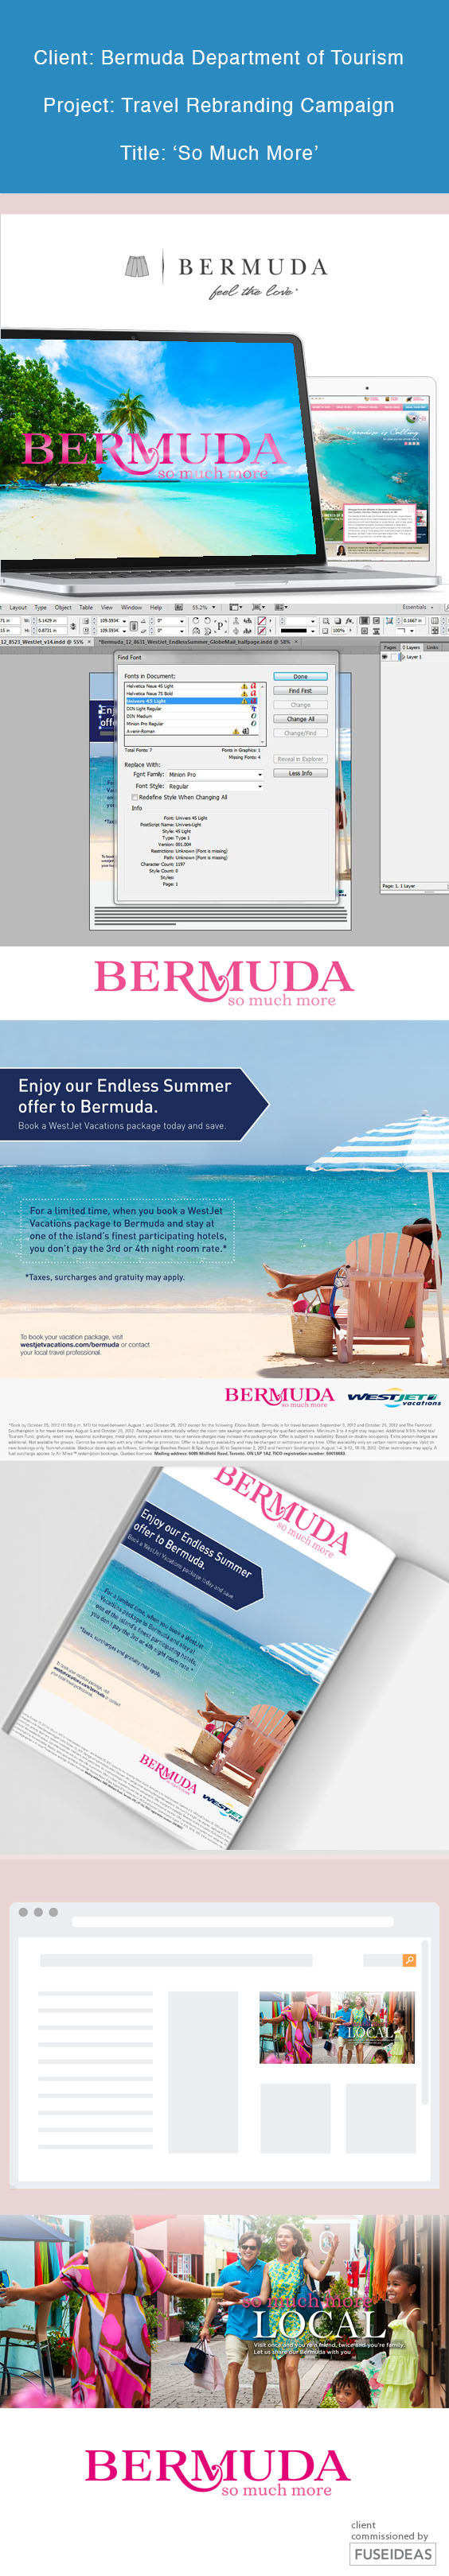 Bermuda Island vacation Sunny paradise tourism tour Guide